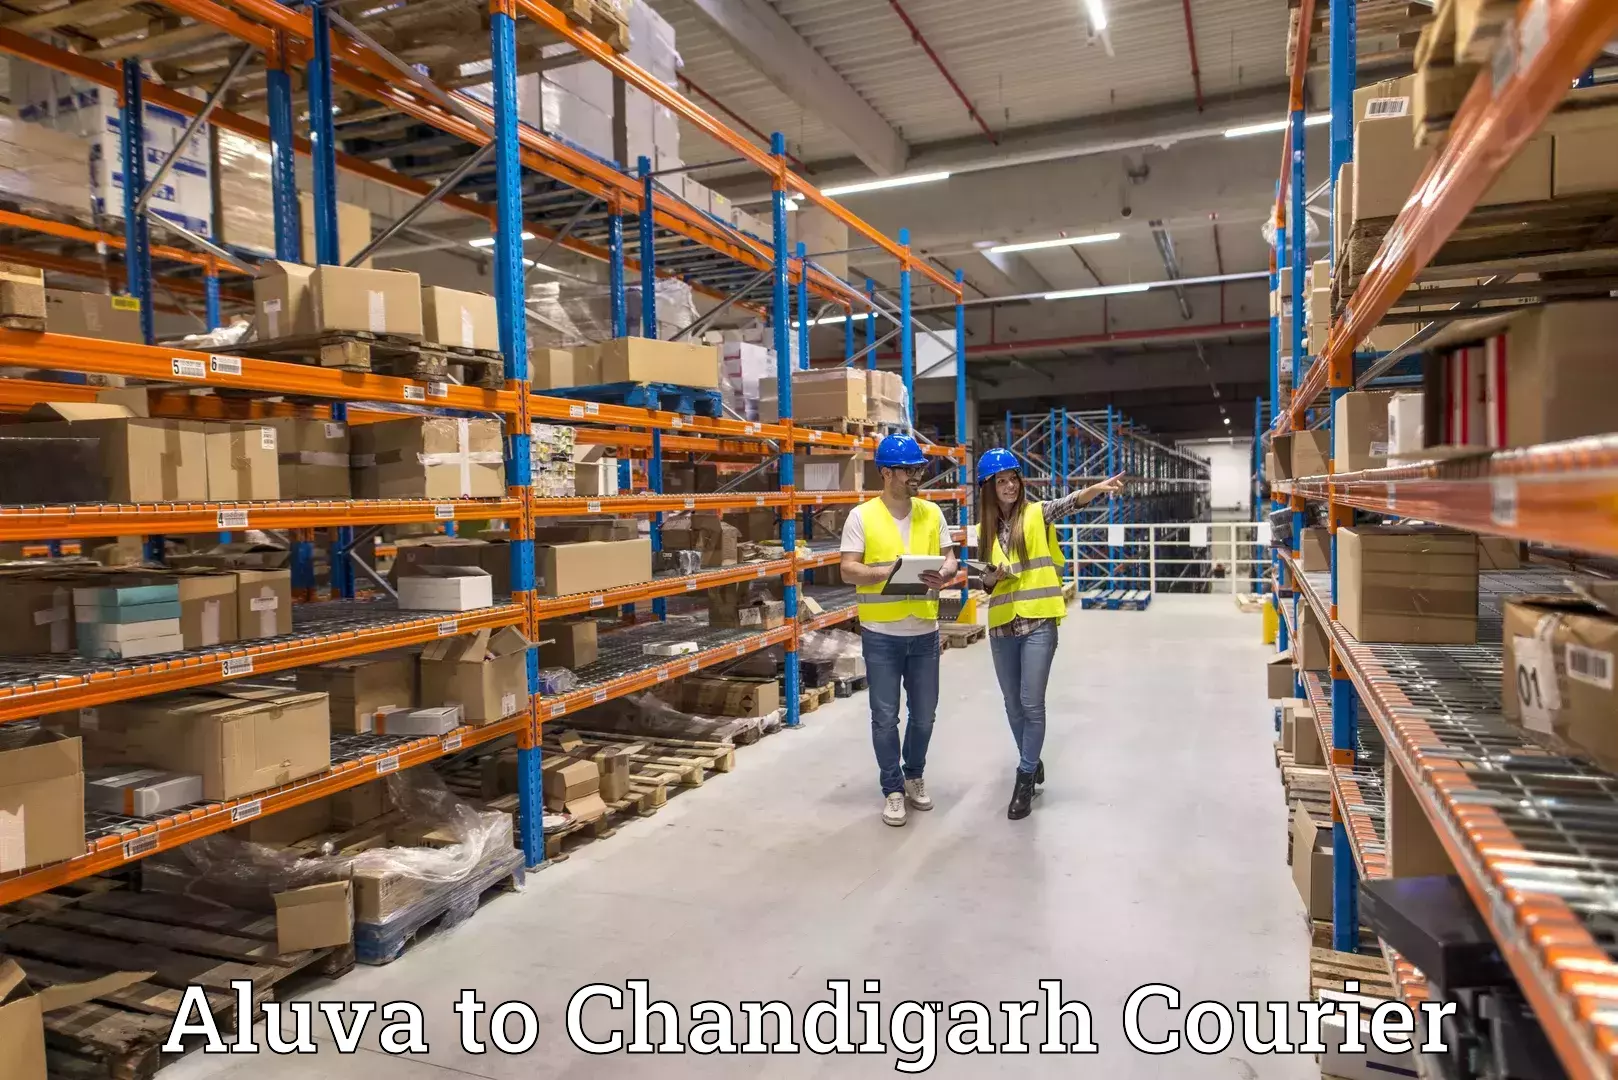 Customer-focused courier Aluva to Chandigarh